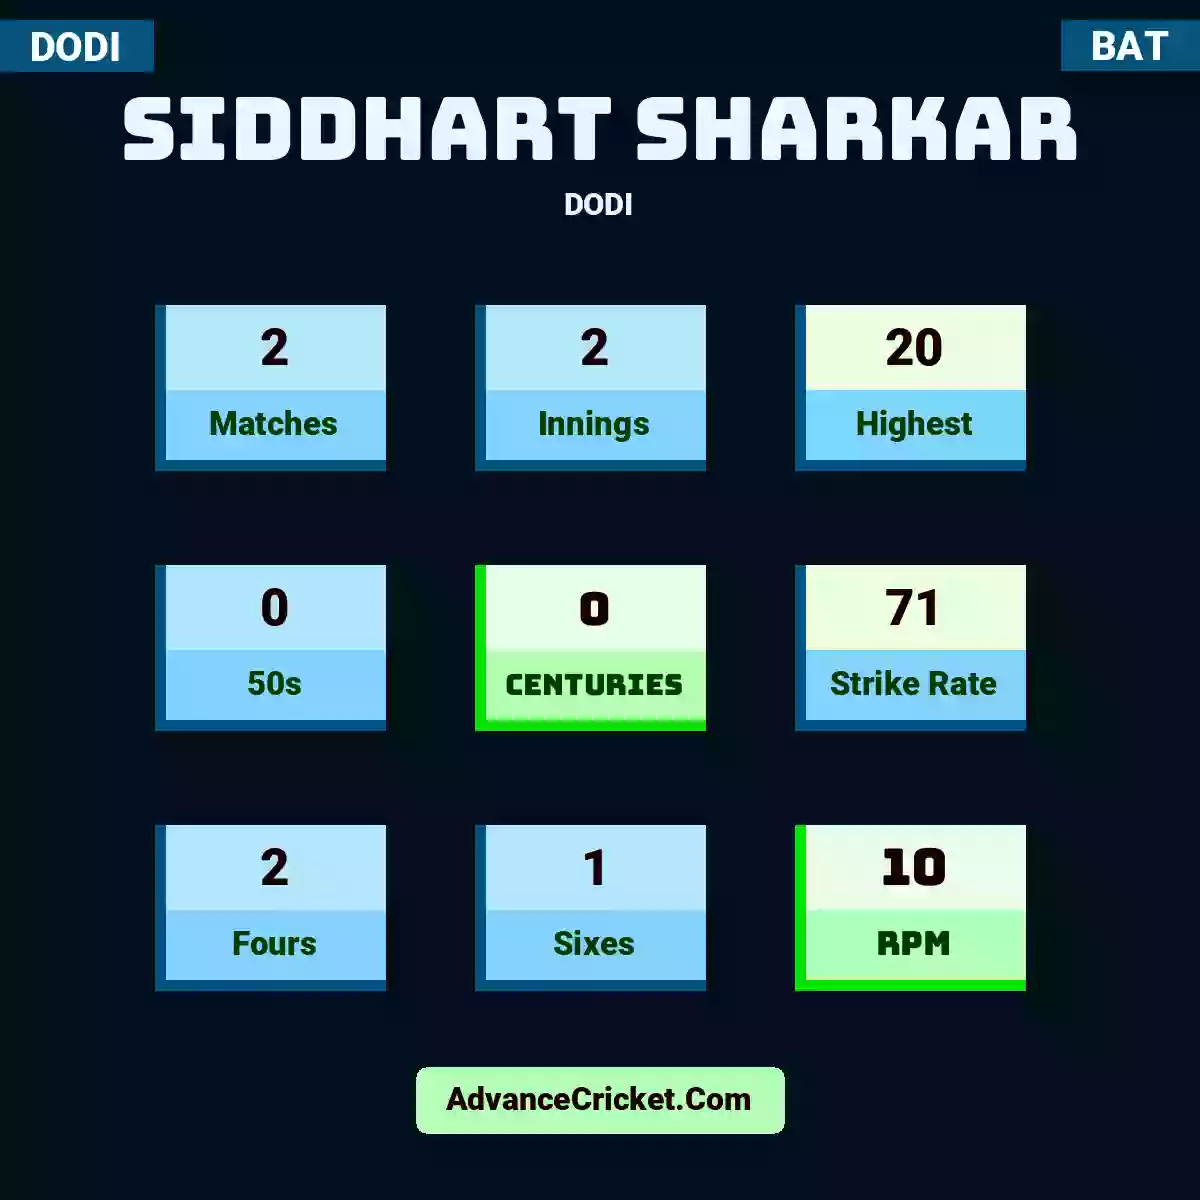 Siddhart Sharkar DODI , Siddhart Sharkar played 2 matches, scored 20 runs as highest, 0 half-centuries, and 0 centuries, with a strike rate of 71. S.Sharkar hit 2 fours and 1 sixes, with an RPM of 10.